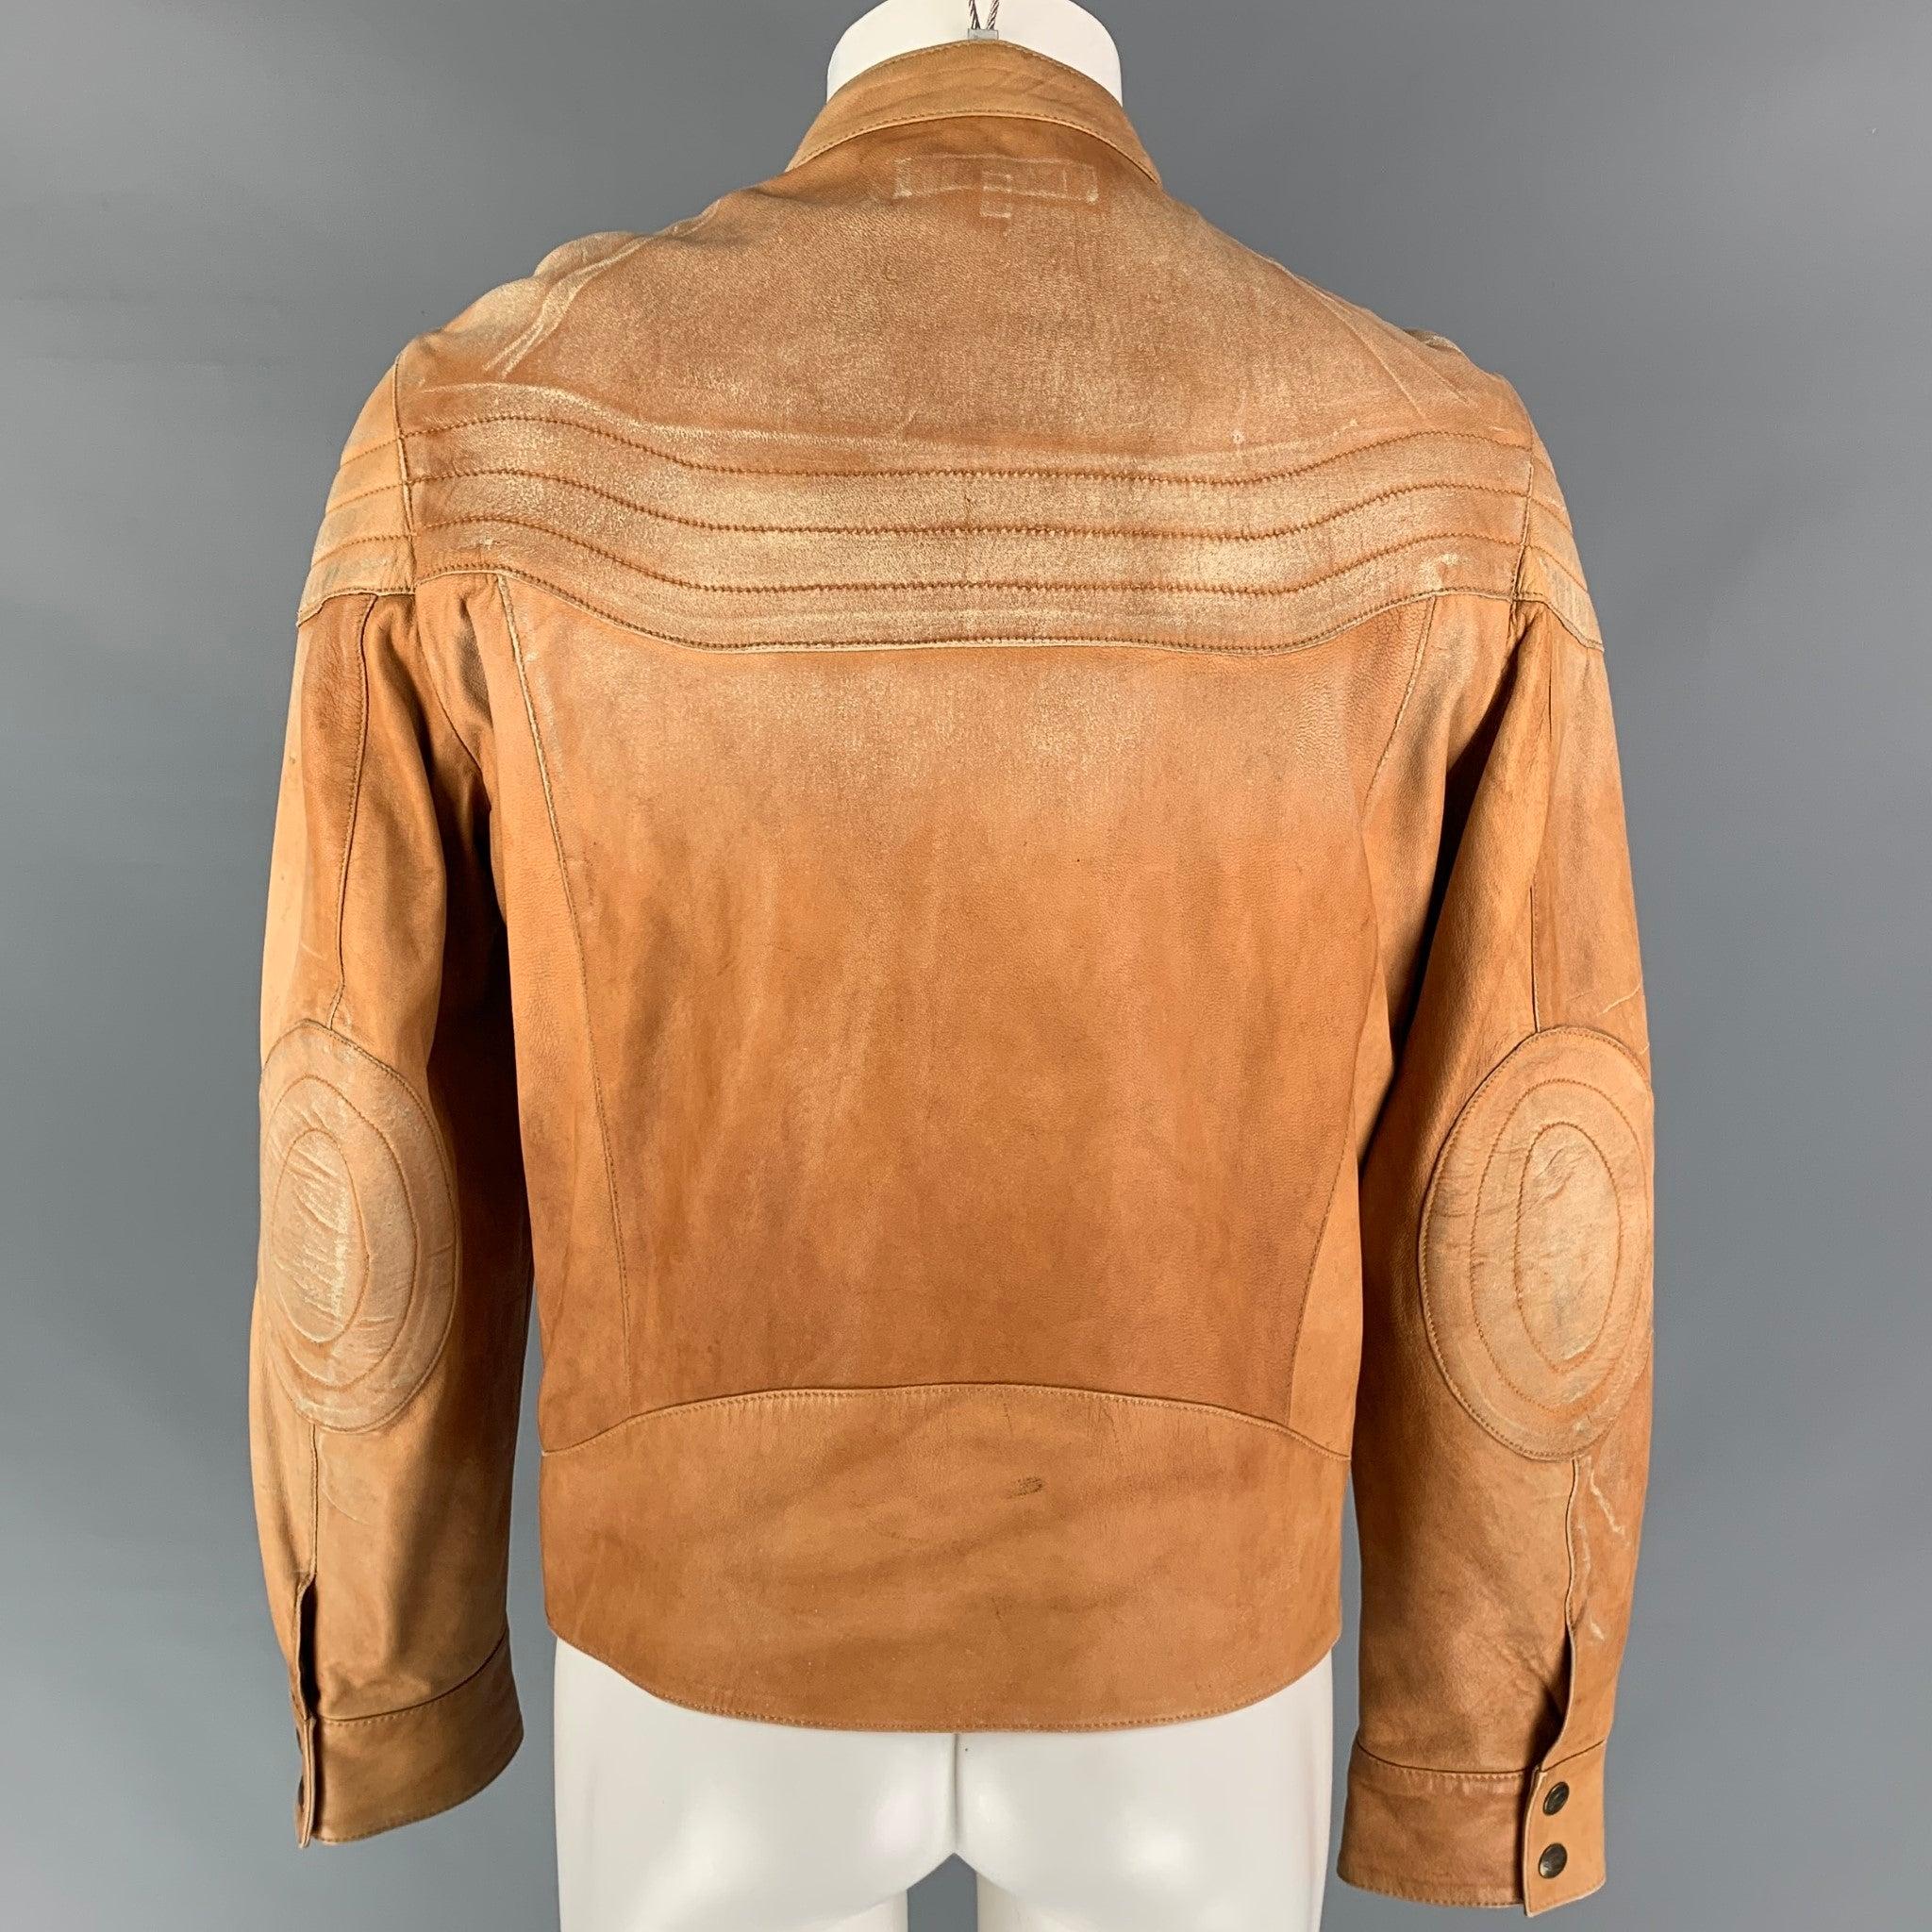 JUST CAVALLI Size 40 Tan Distressed Leather Biker Jacket For Sale 1